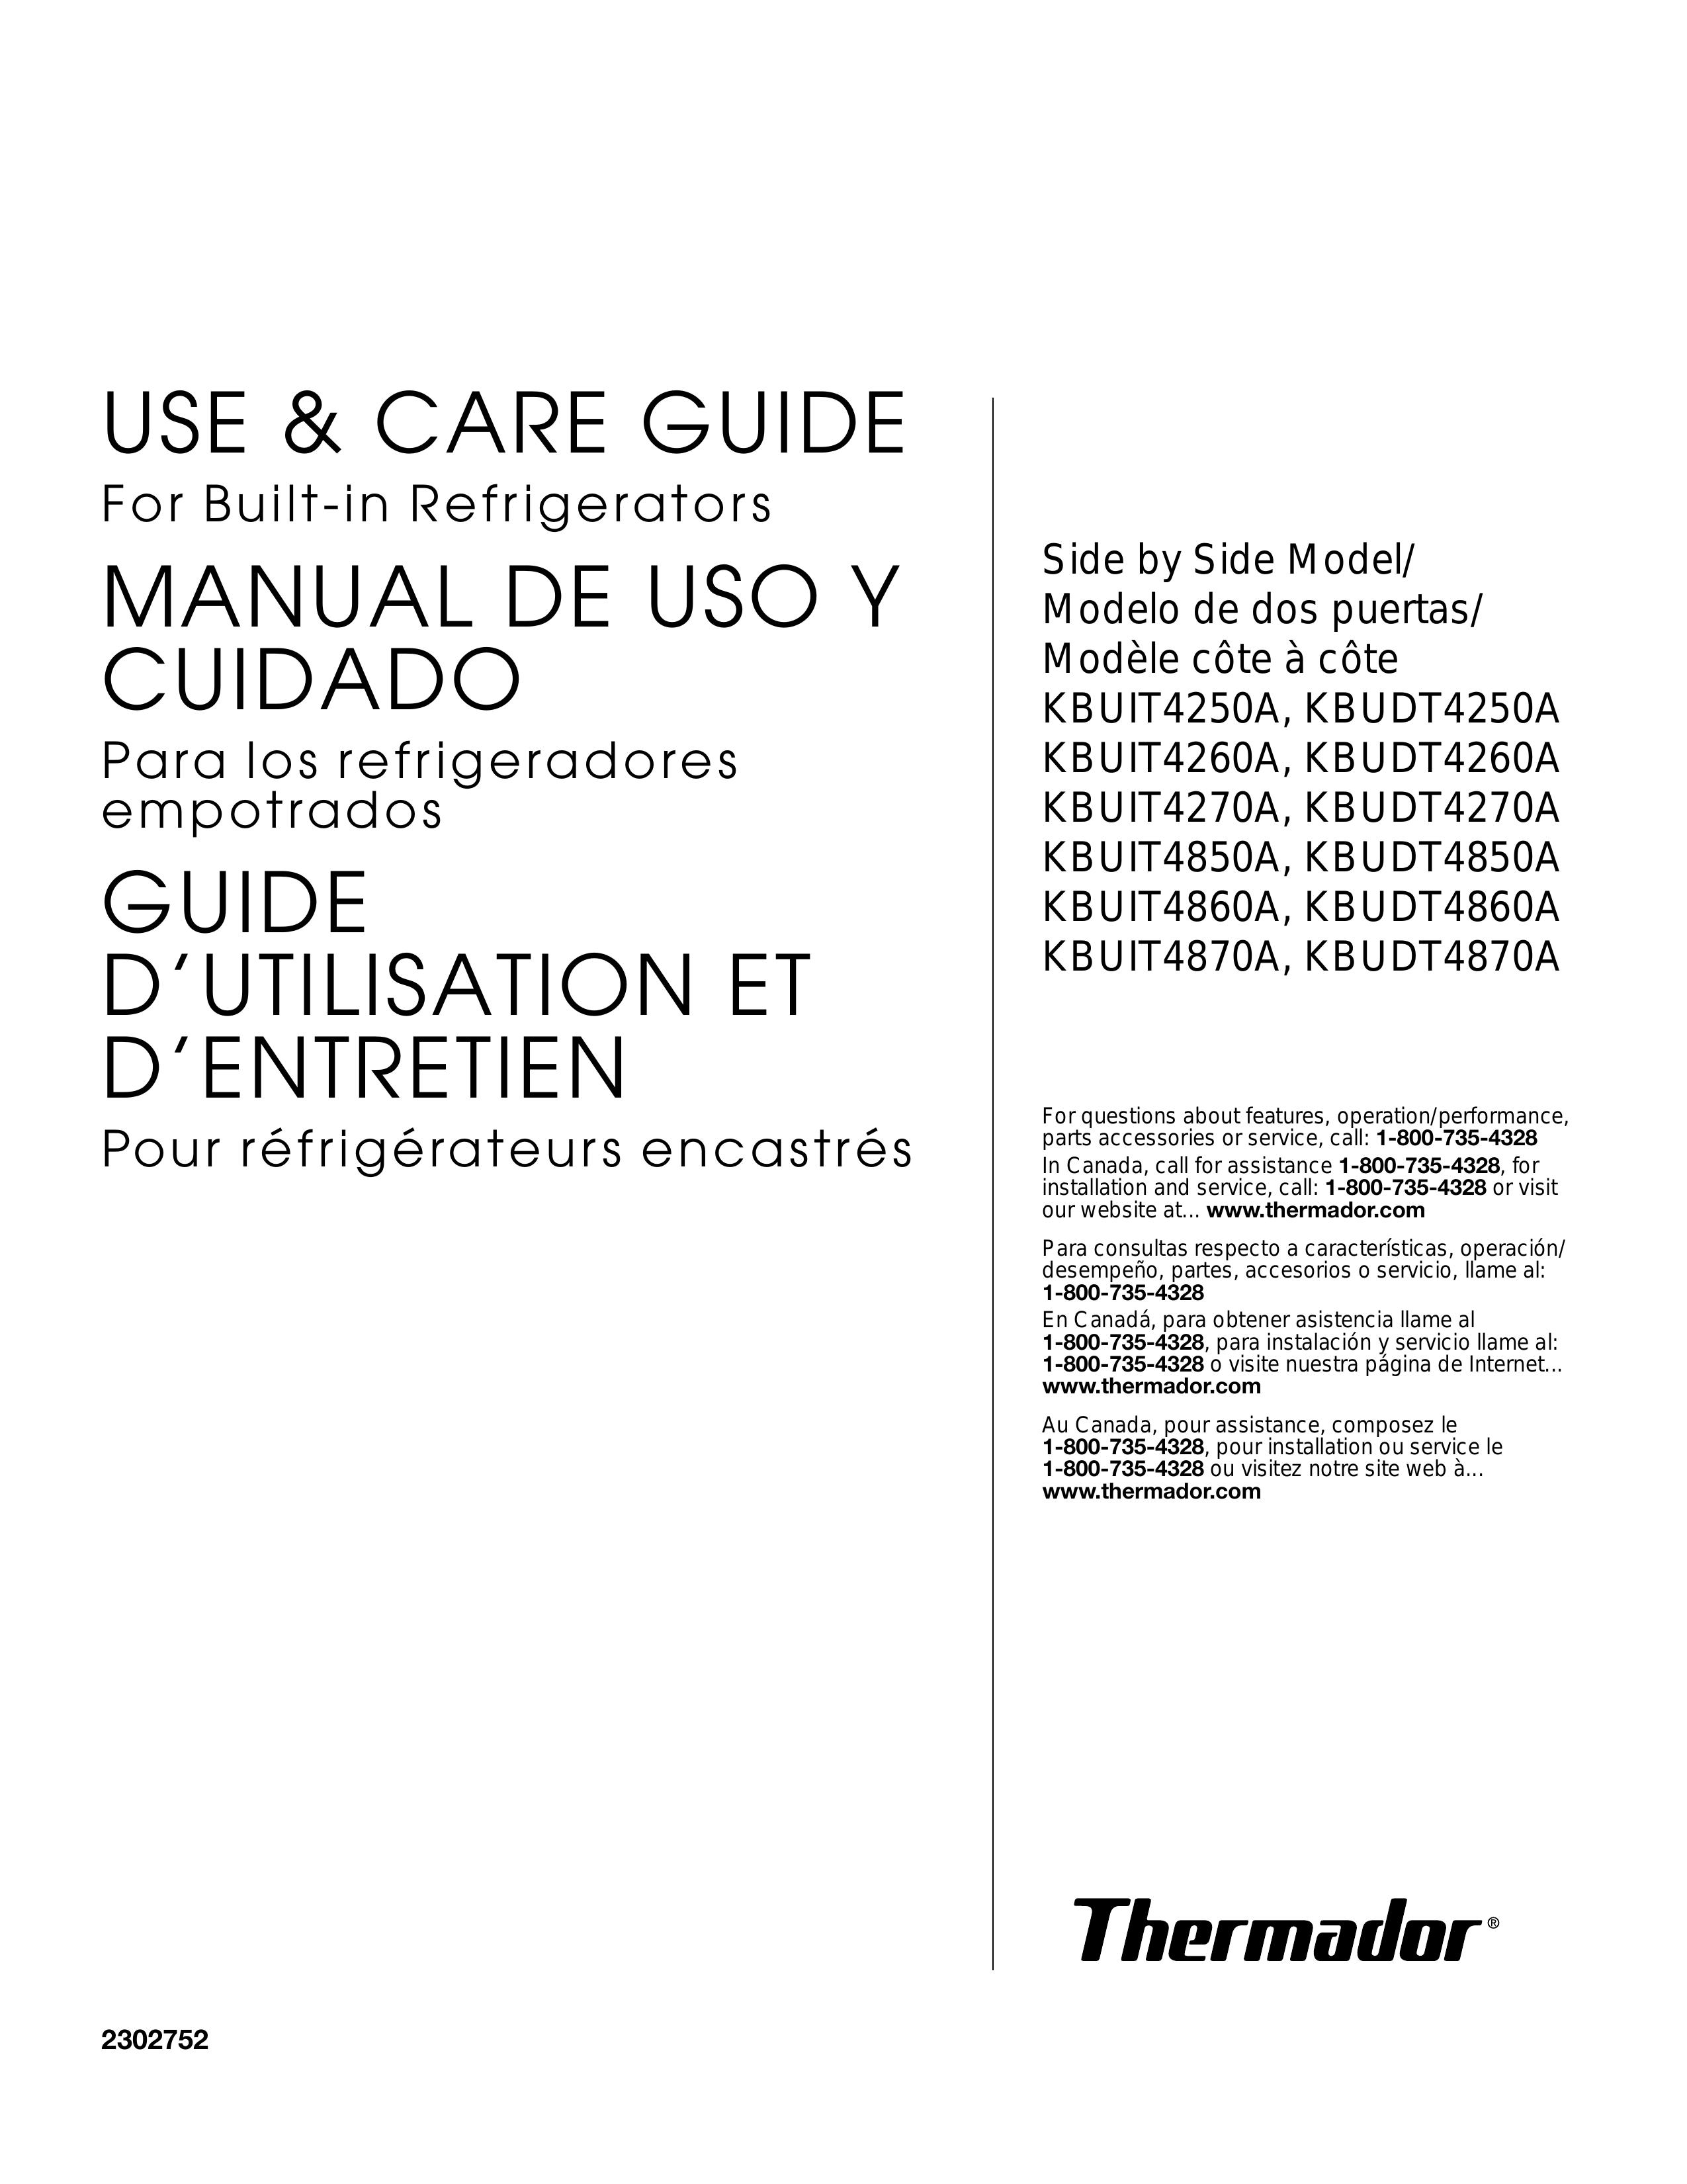 Thermador KBUDT4270A Refrigerator User Manual